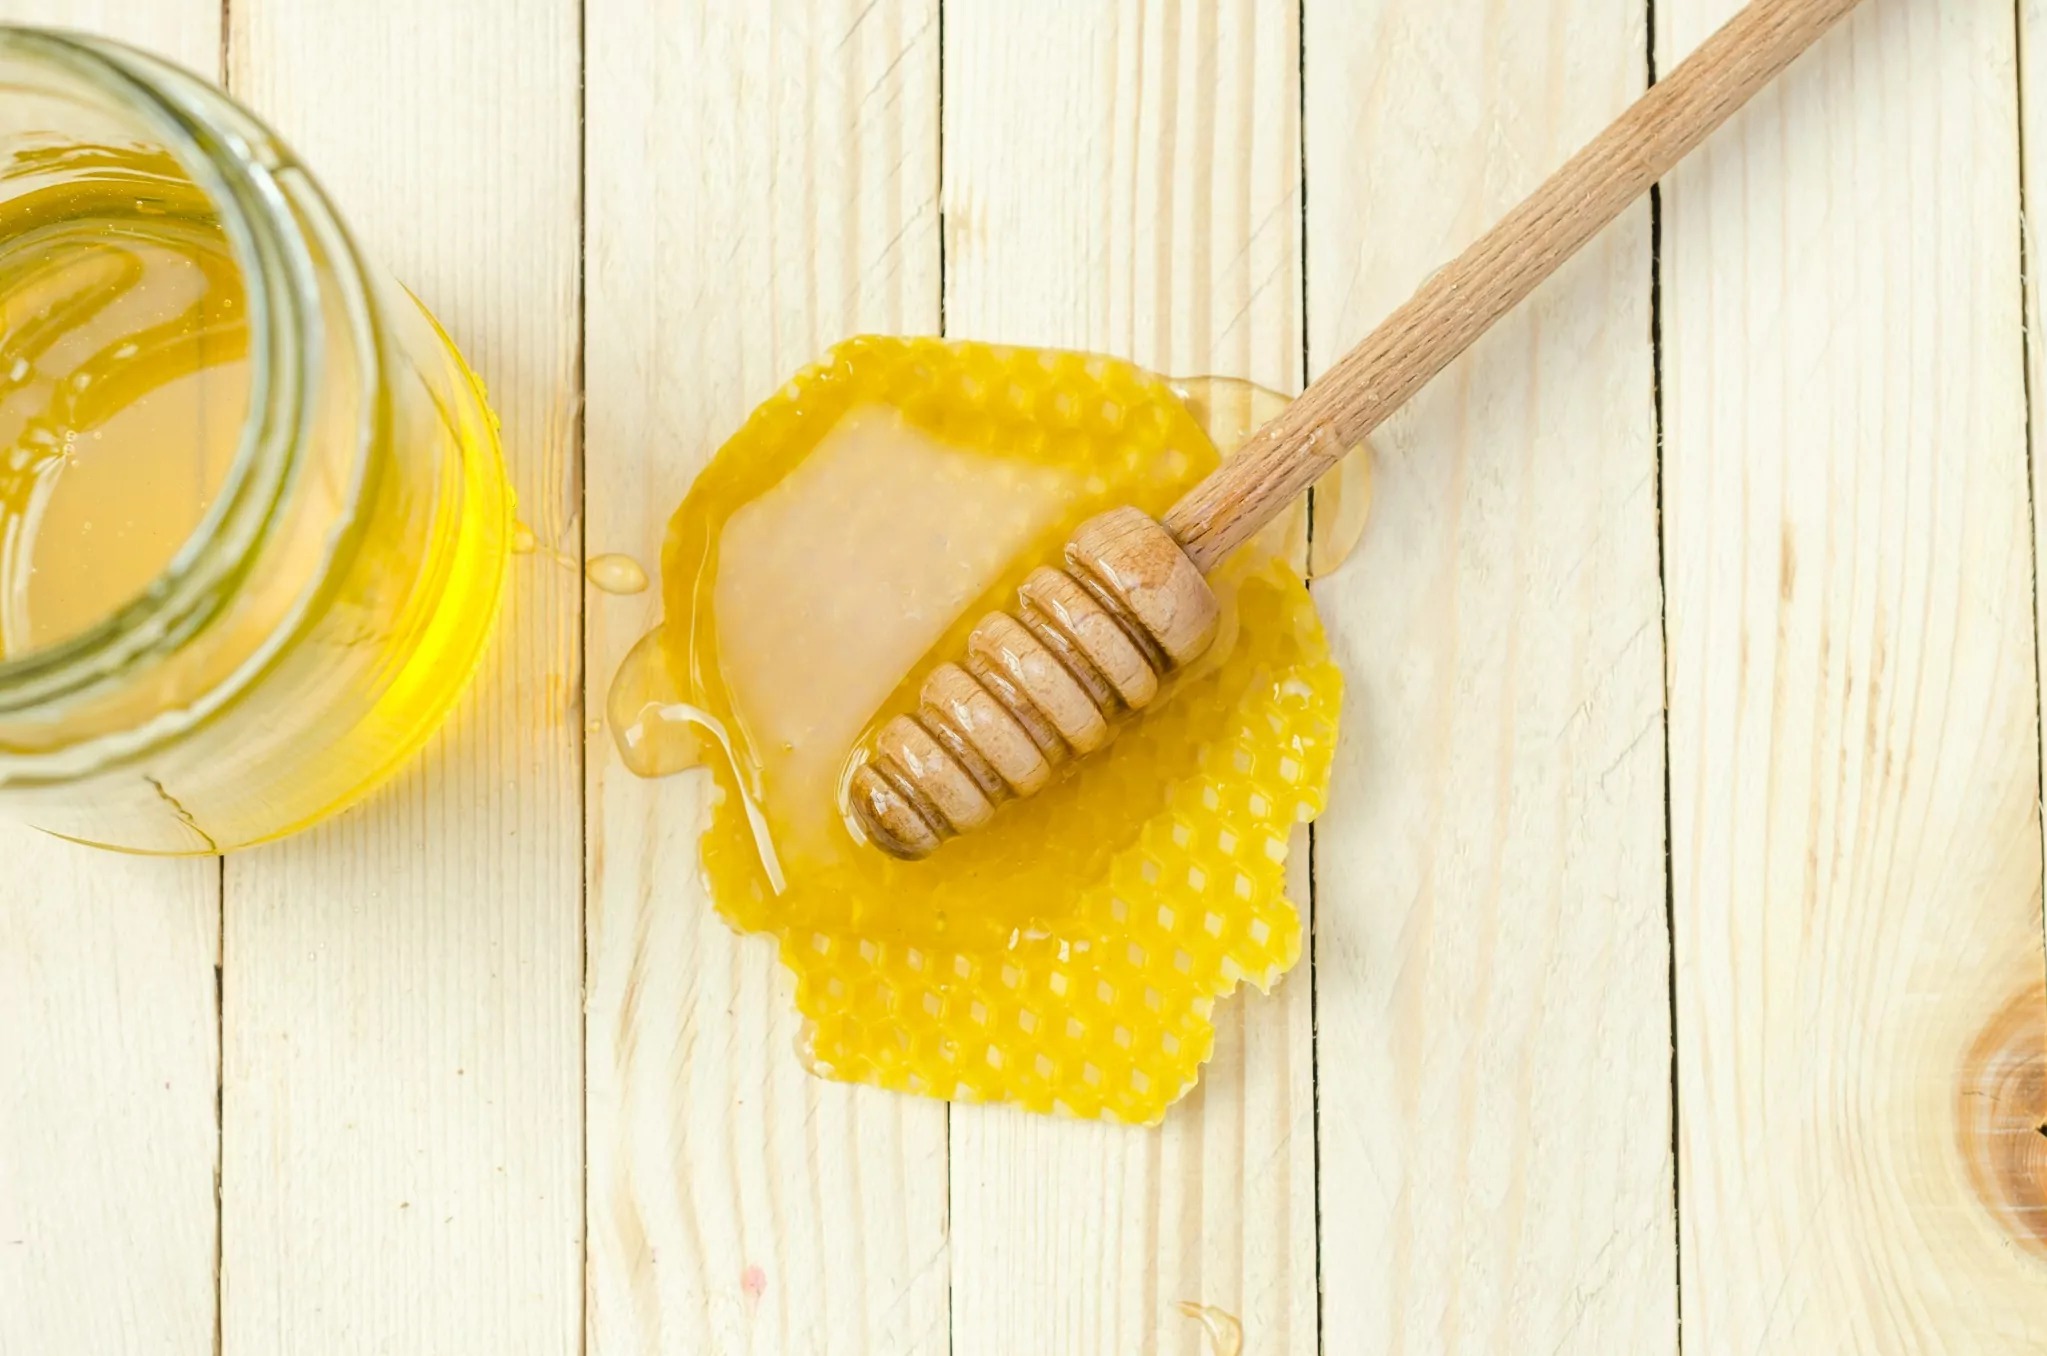 8 Wonderful Benefits of Honey